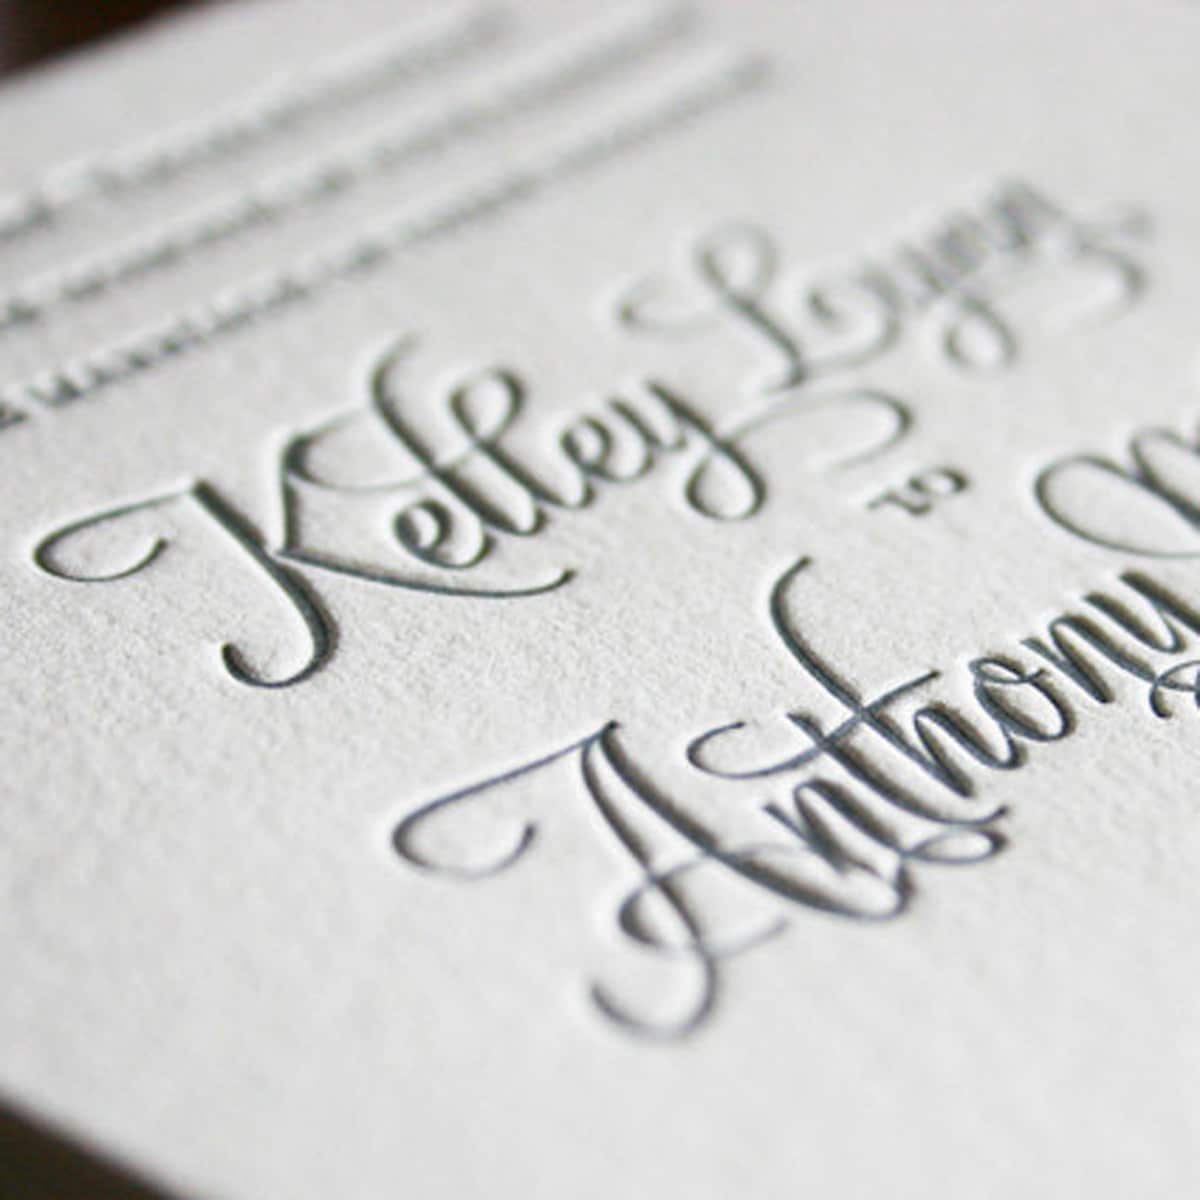 Elegant wedding invitations with letterpress printing. www.mospensstudio.com